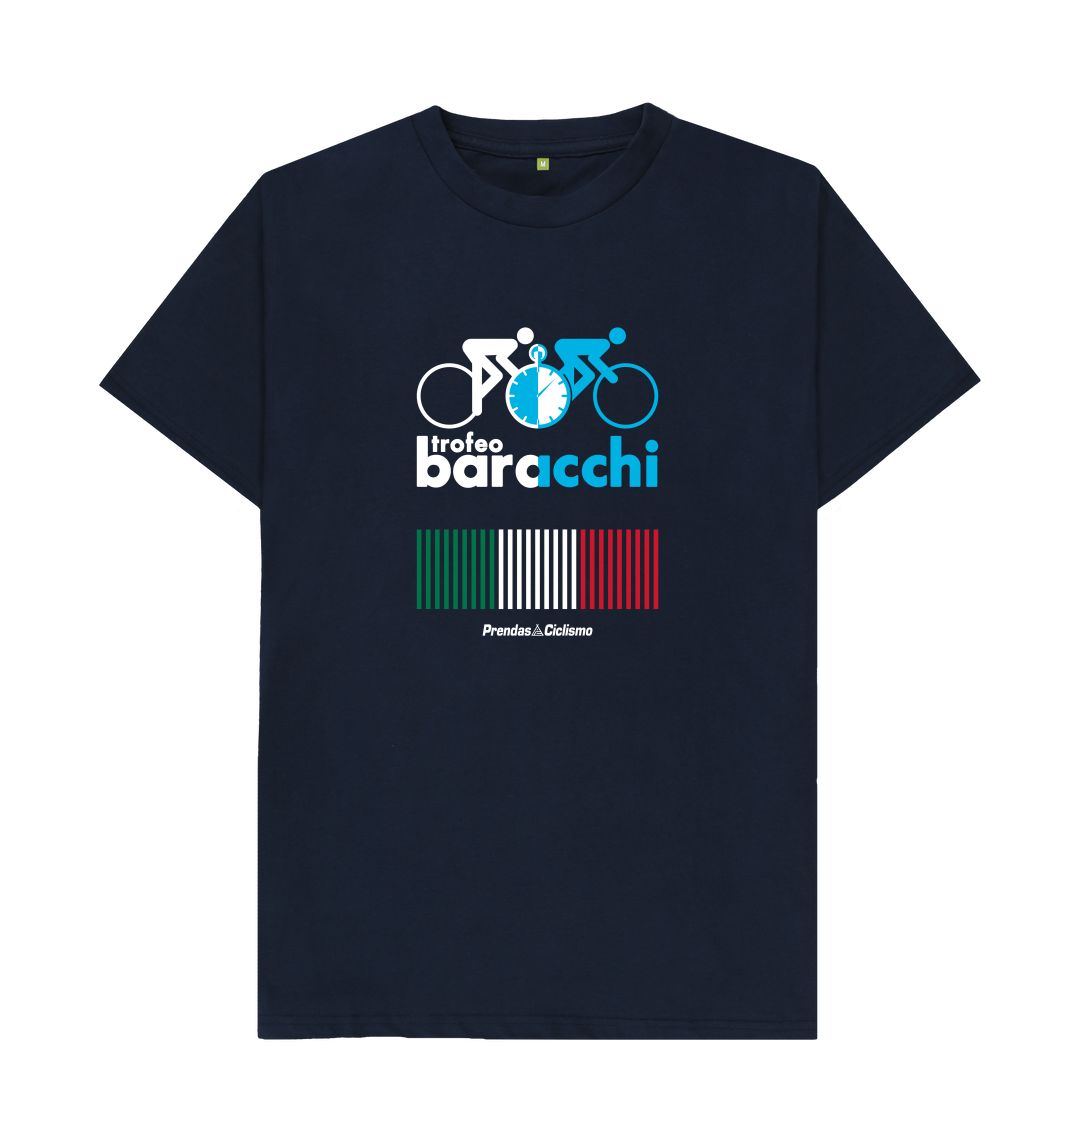 Trofeo Baracchi Race T-Shirt